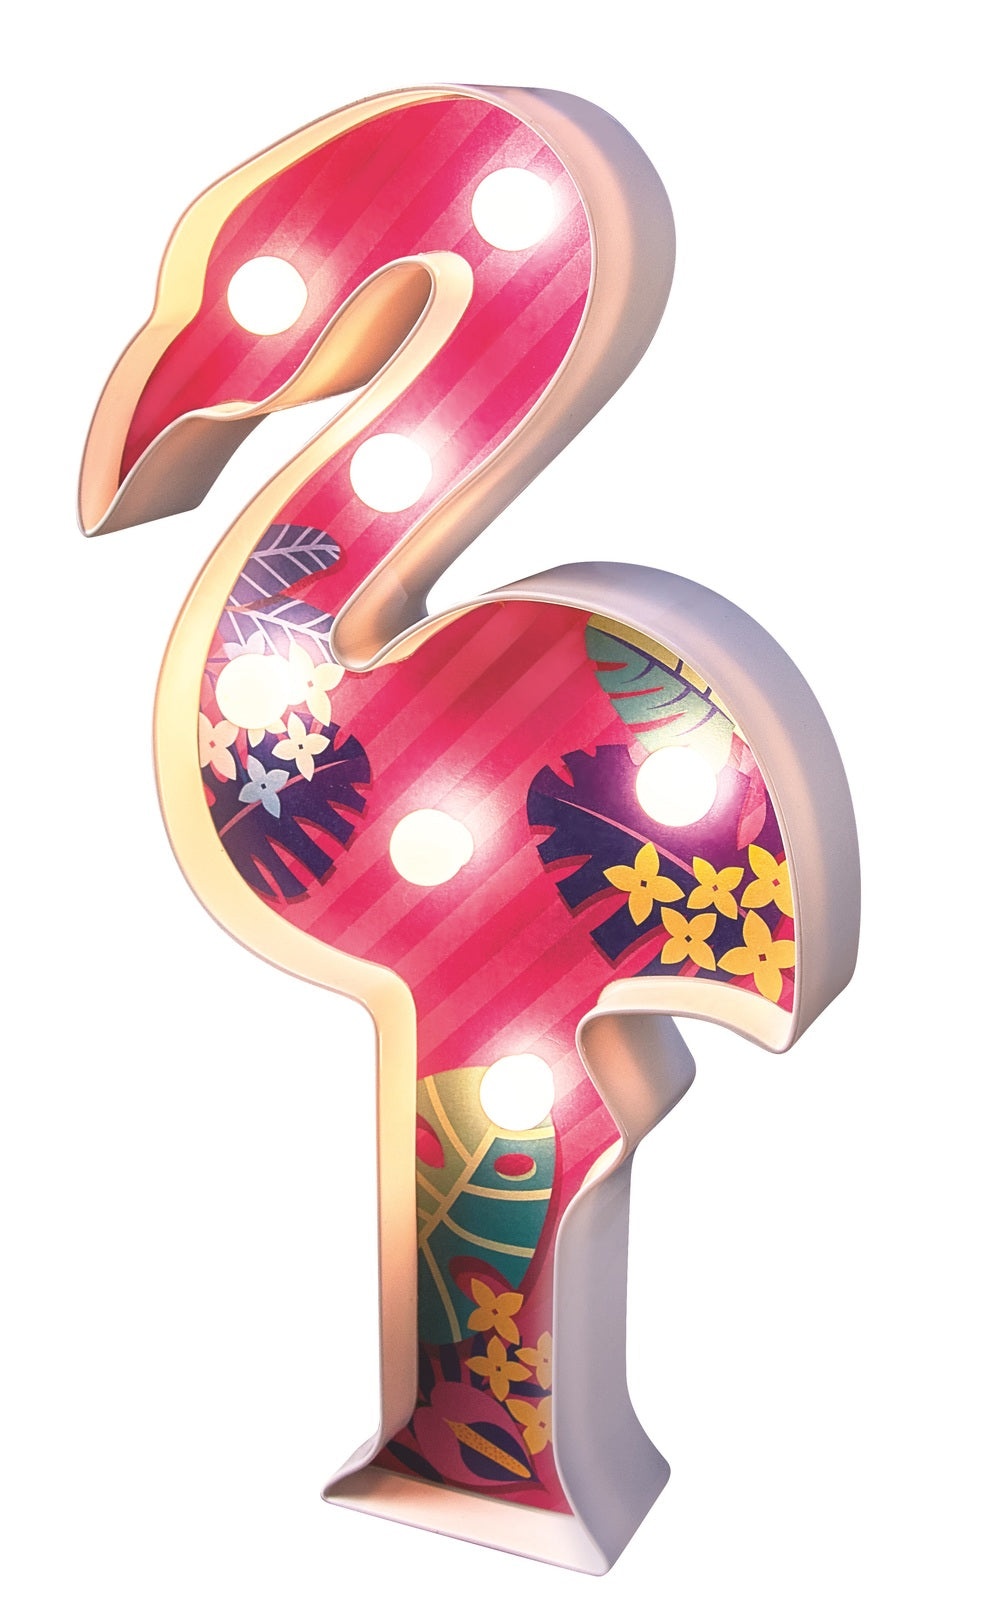 4M KidzMaker: Room Light Kit - Flamingo